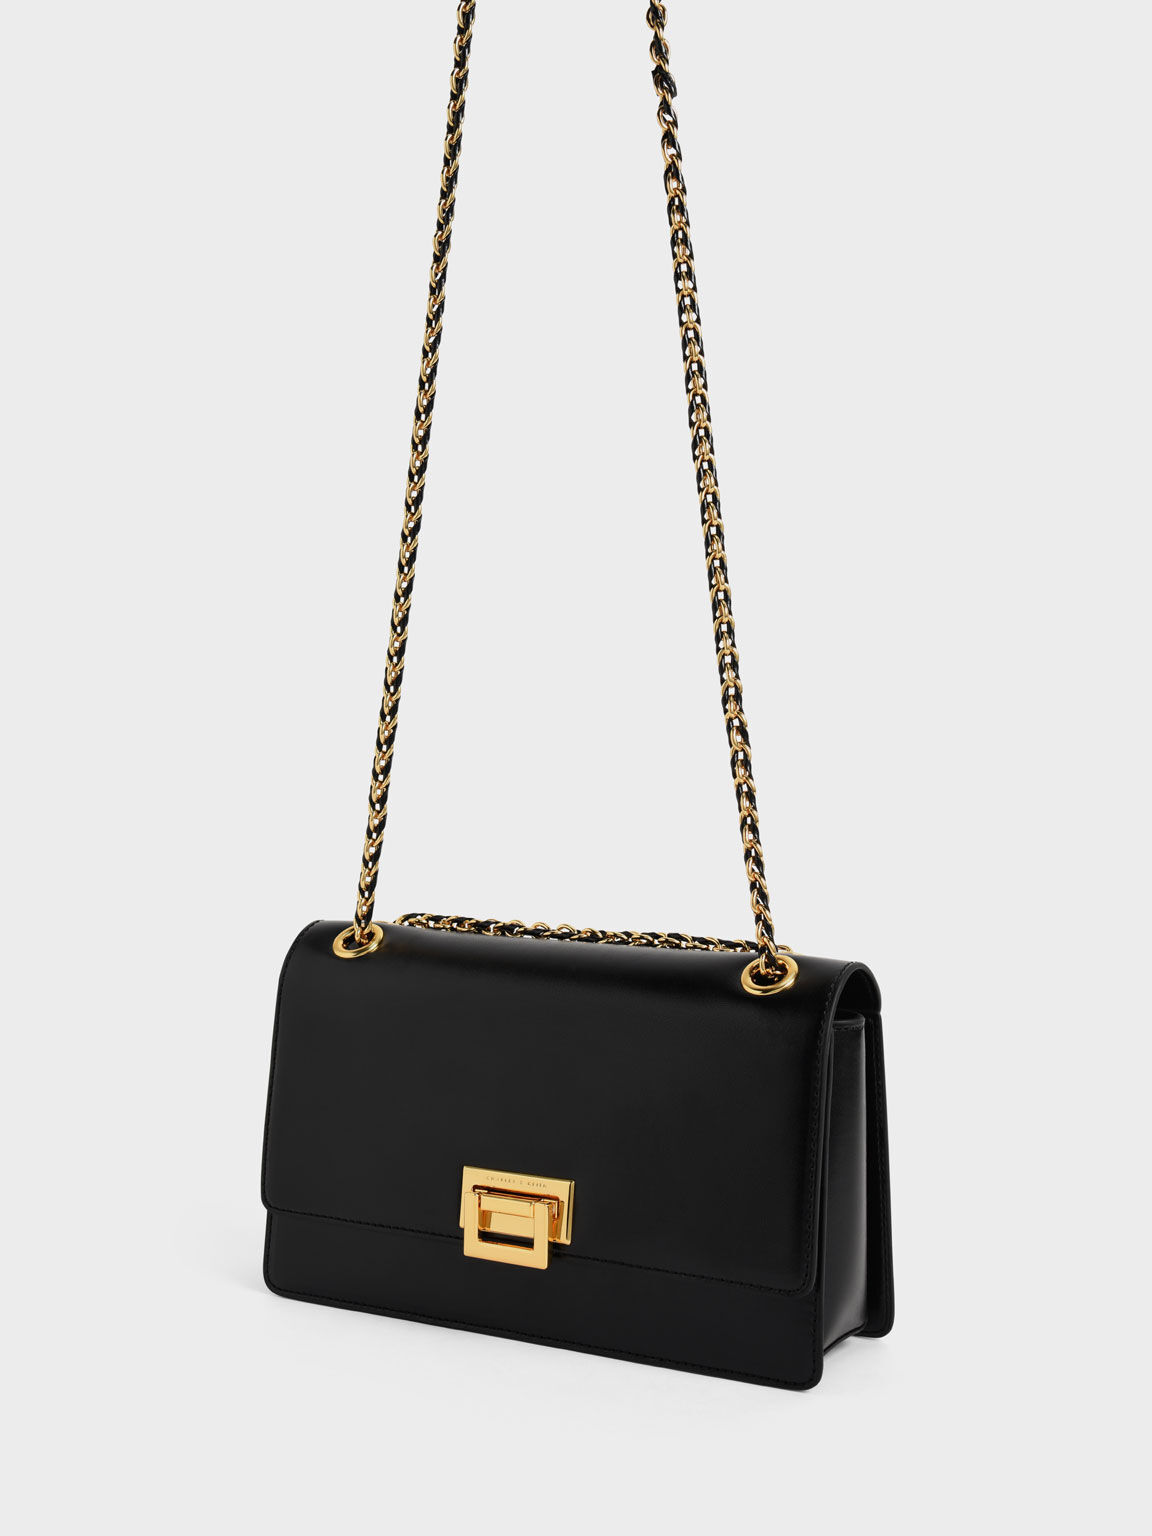 JOLLQUE Shoulder Bag for Women,Small Leather Dumpling Bag Handbag Purse,Gold  Chain Going Out Evening Clutch Purses (Black): Handbags: Amazon.com